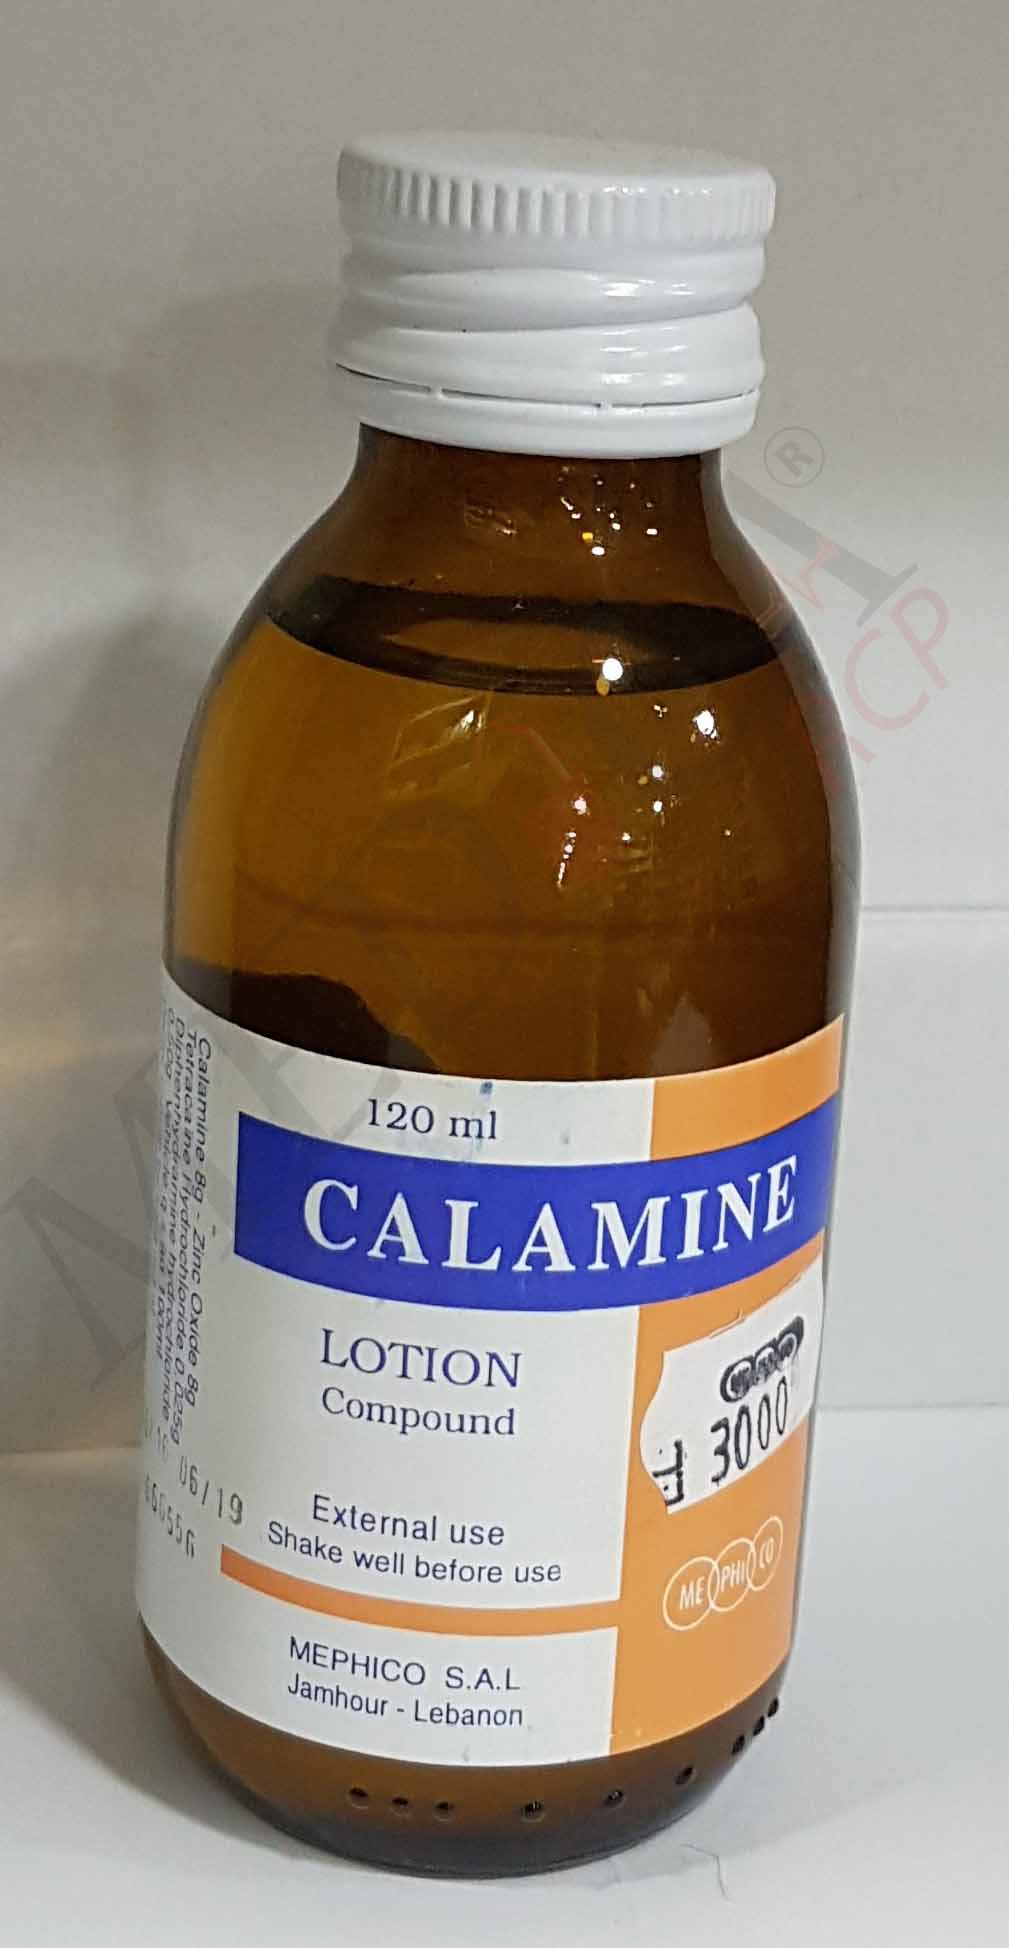 Calamine Lotion Compound